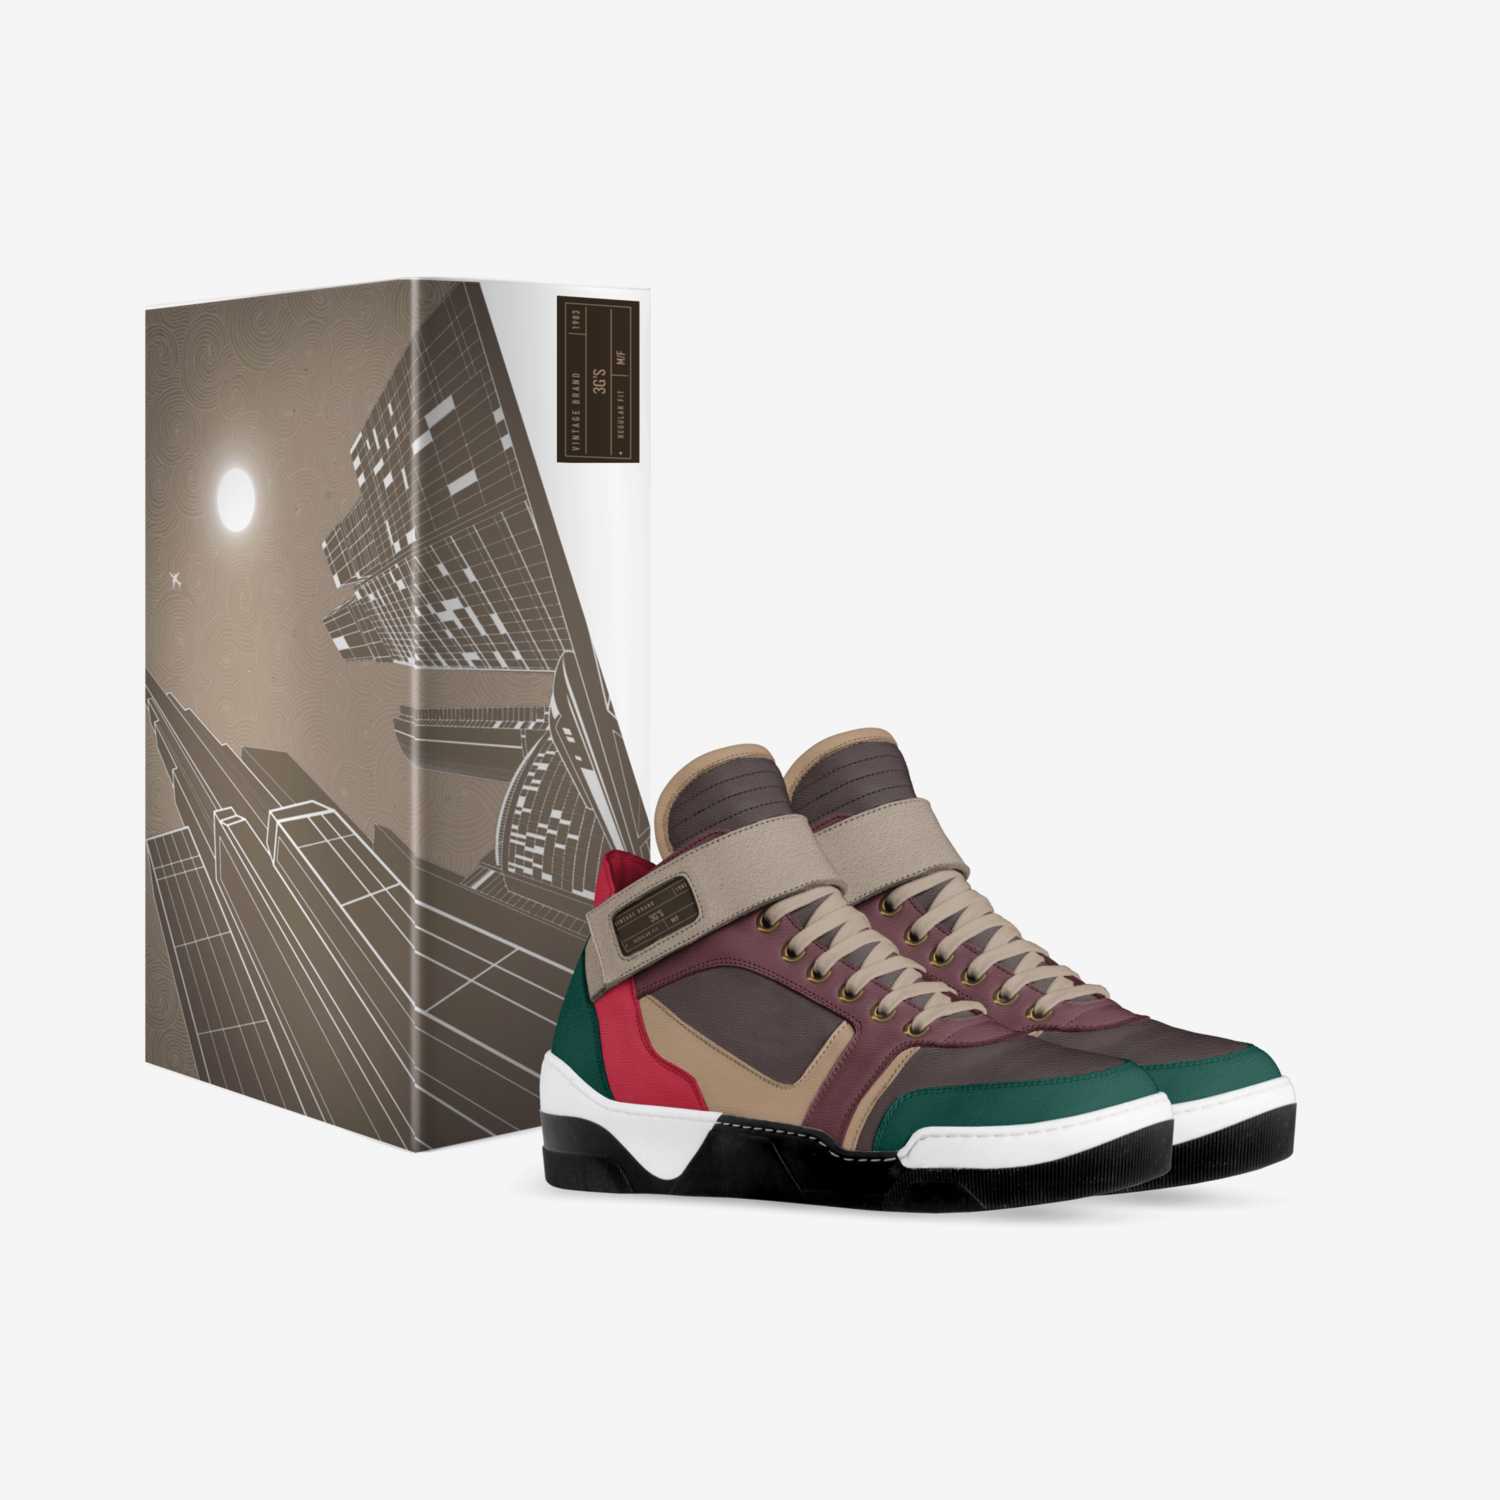 3G's custom made in Italy shoes by Rastafasi Iosua | Box view